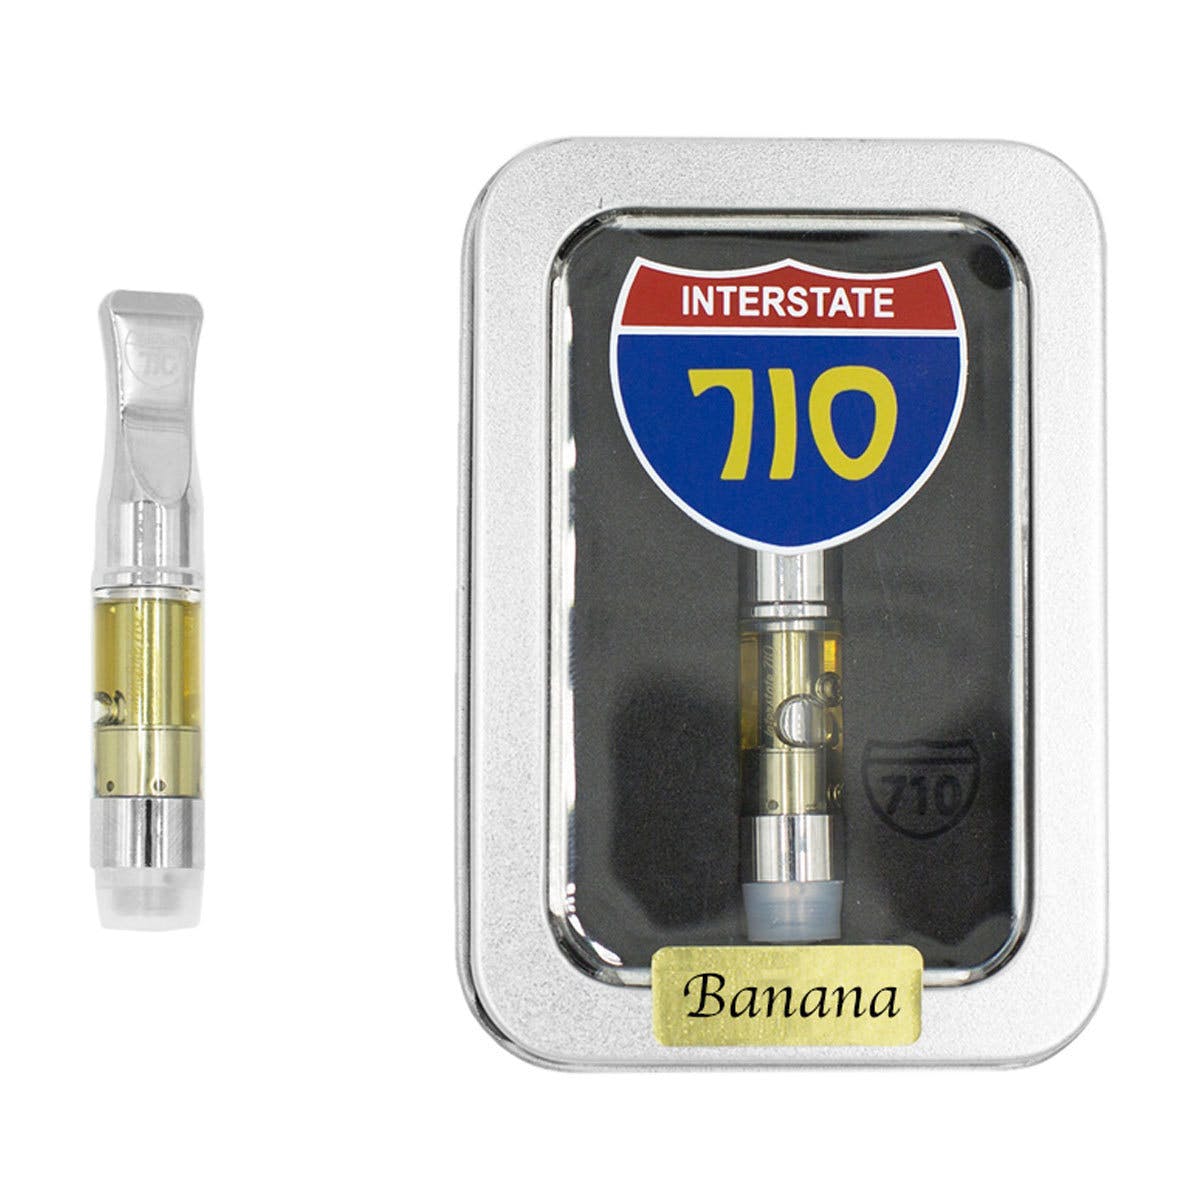 concentrate-interstate-cannabinoids-710-banana-cartridge